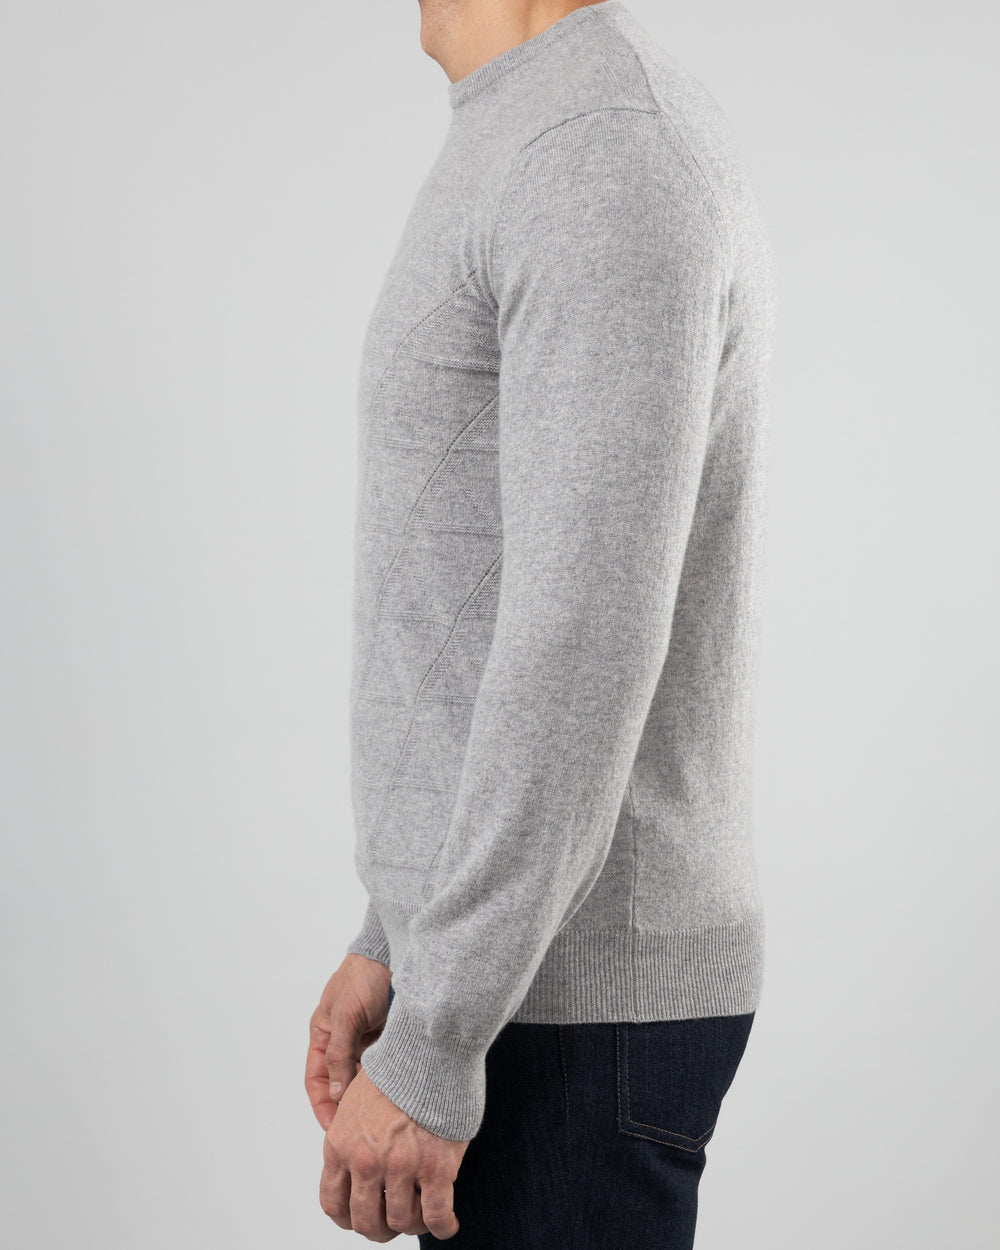 Sleet Sweater in Cashmere, Pearl Grey